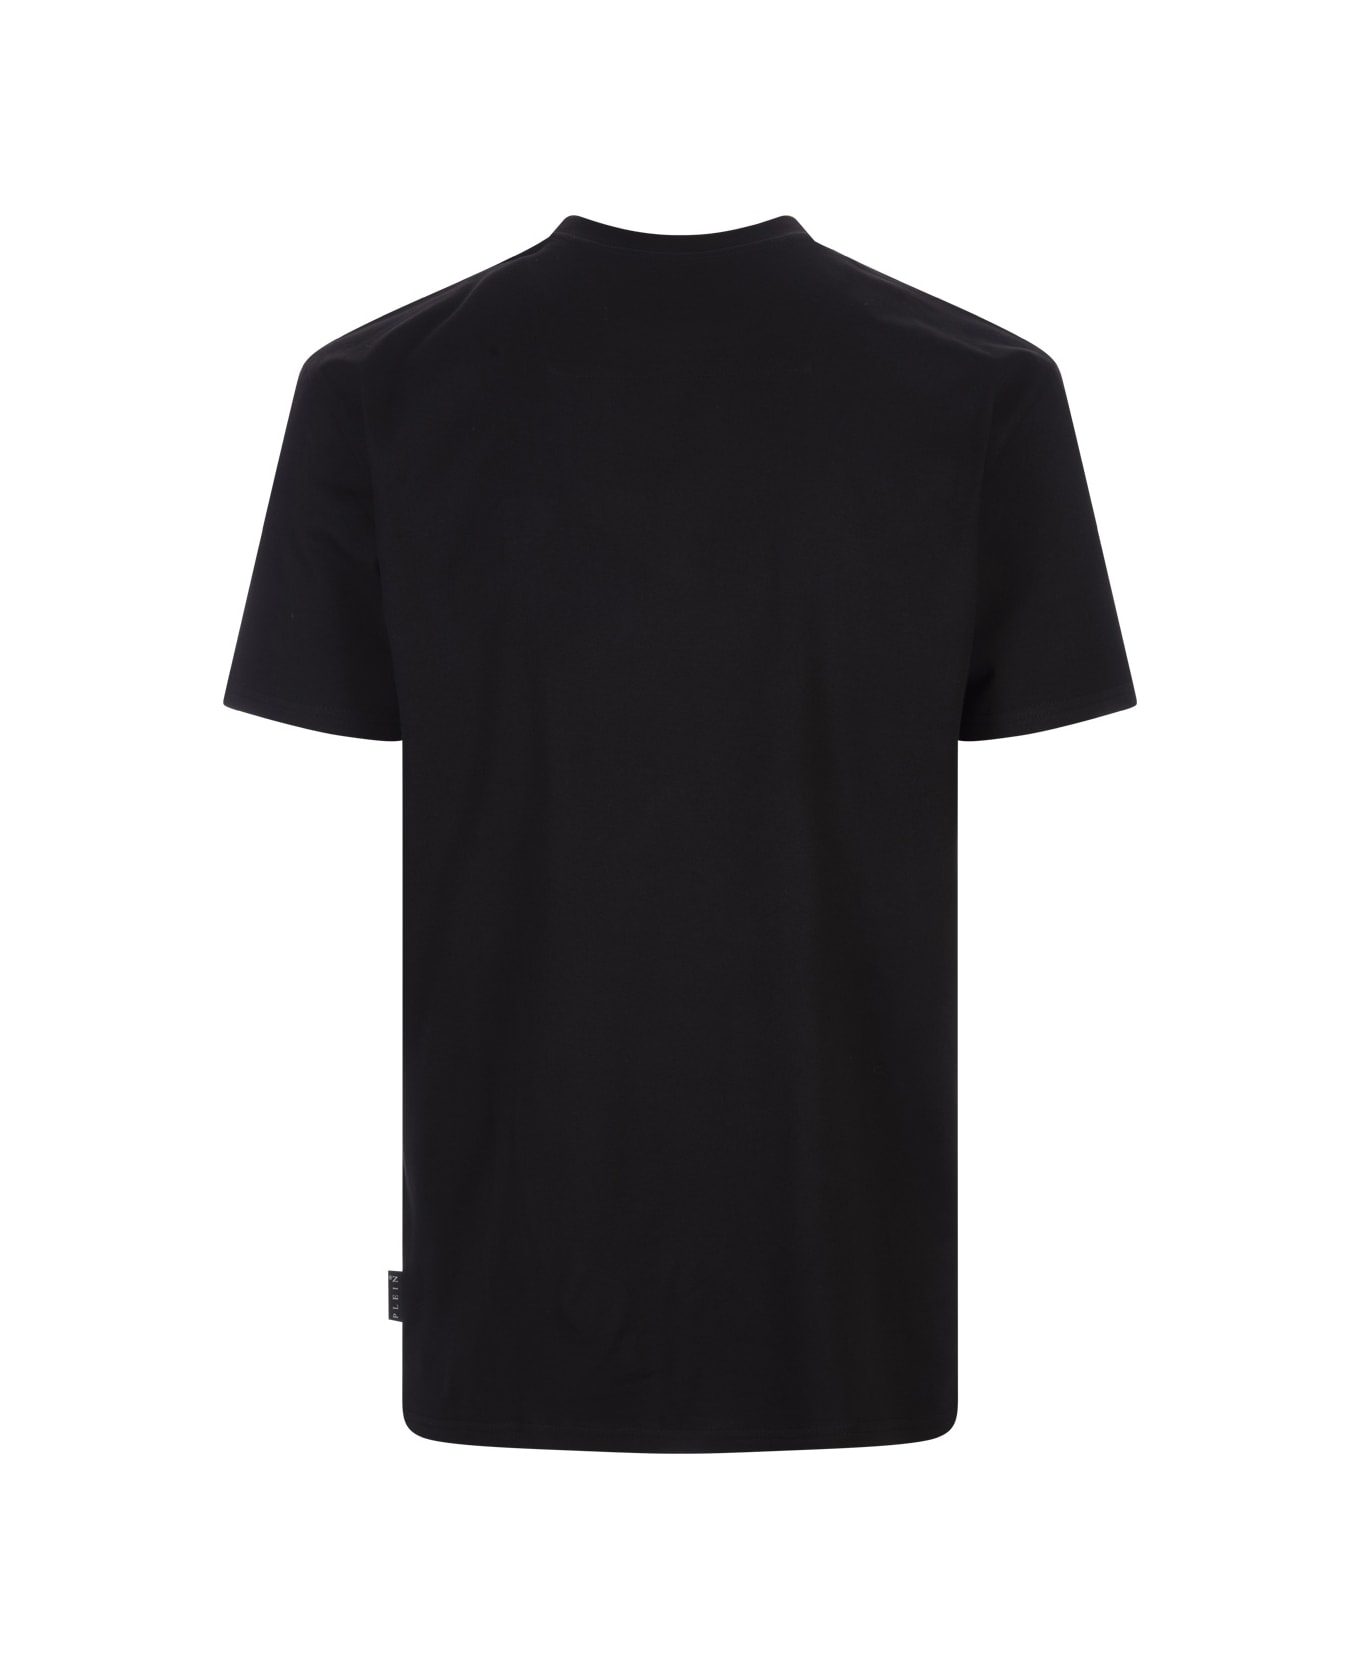 Philipp Plein Black T-shirt With Embroidered Logo - Black シャツ